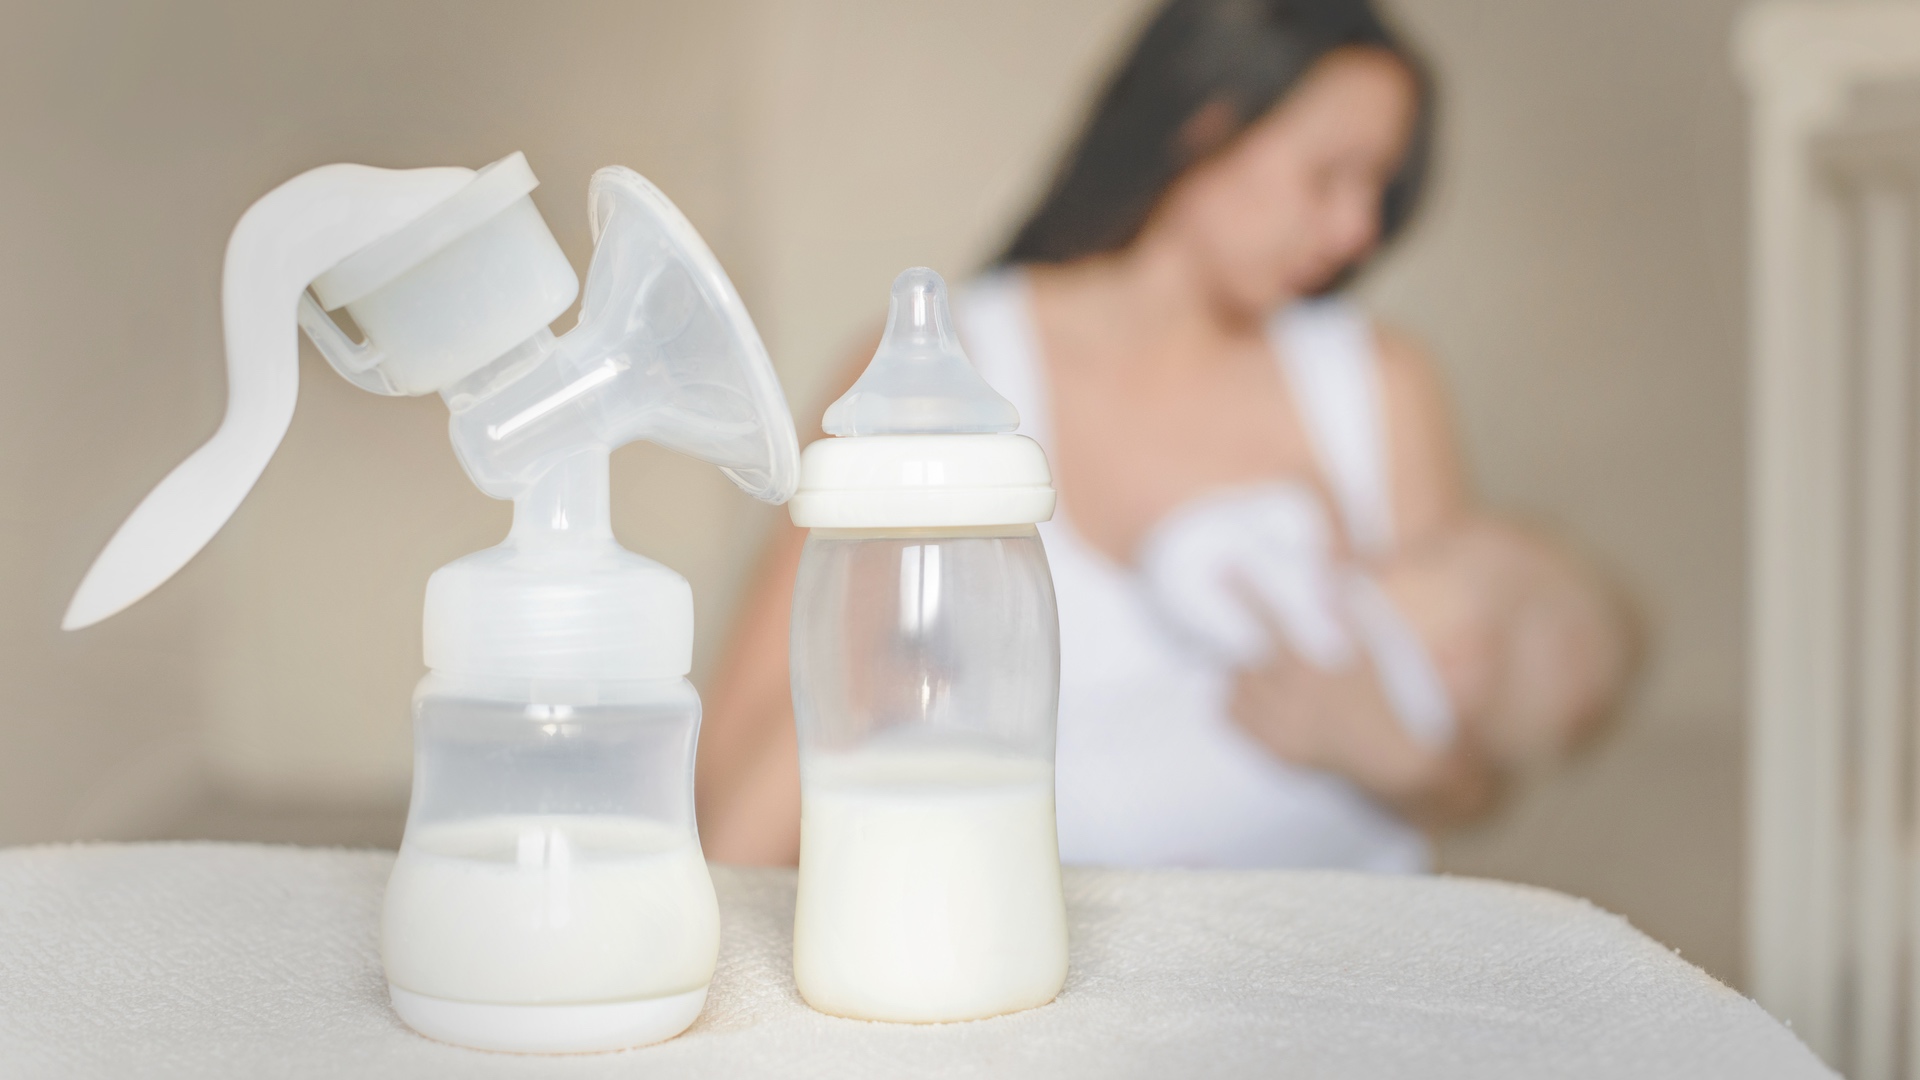 Breastfeeding: Breast Fullness and Engorgement